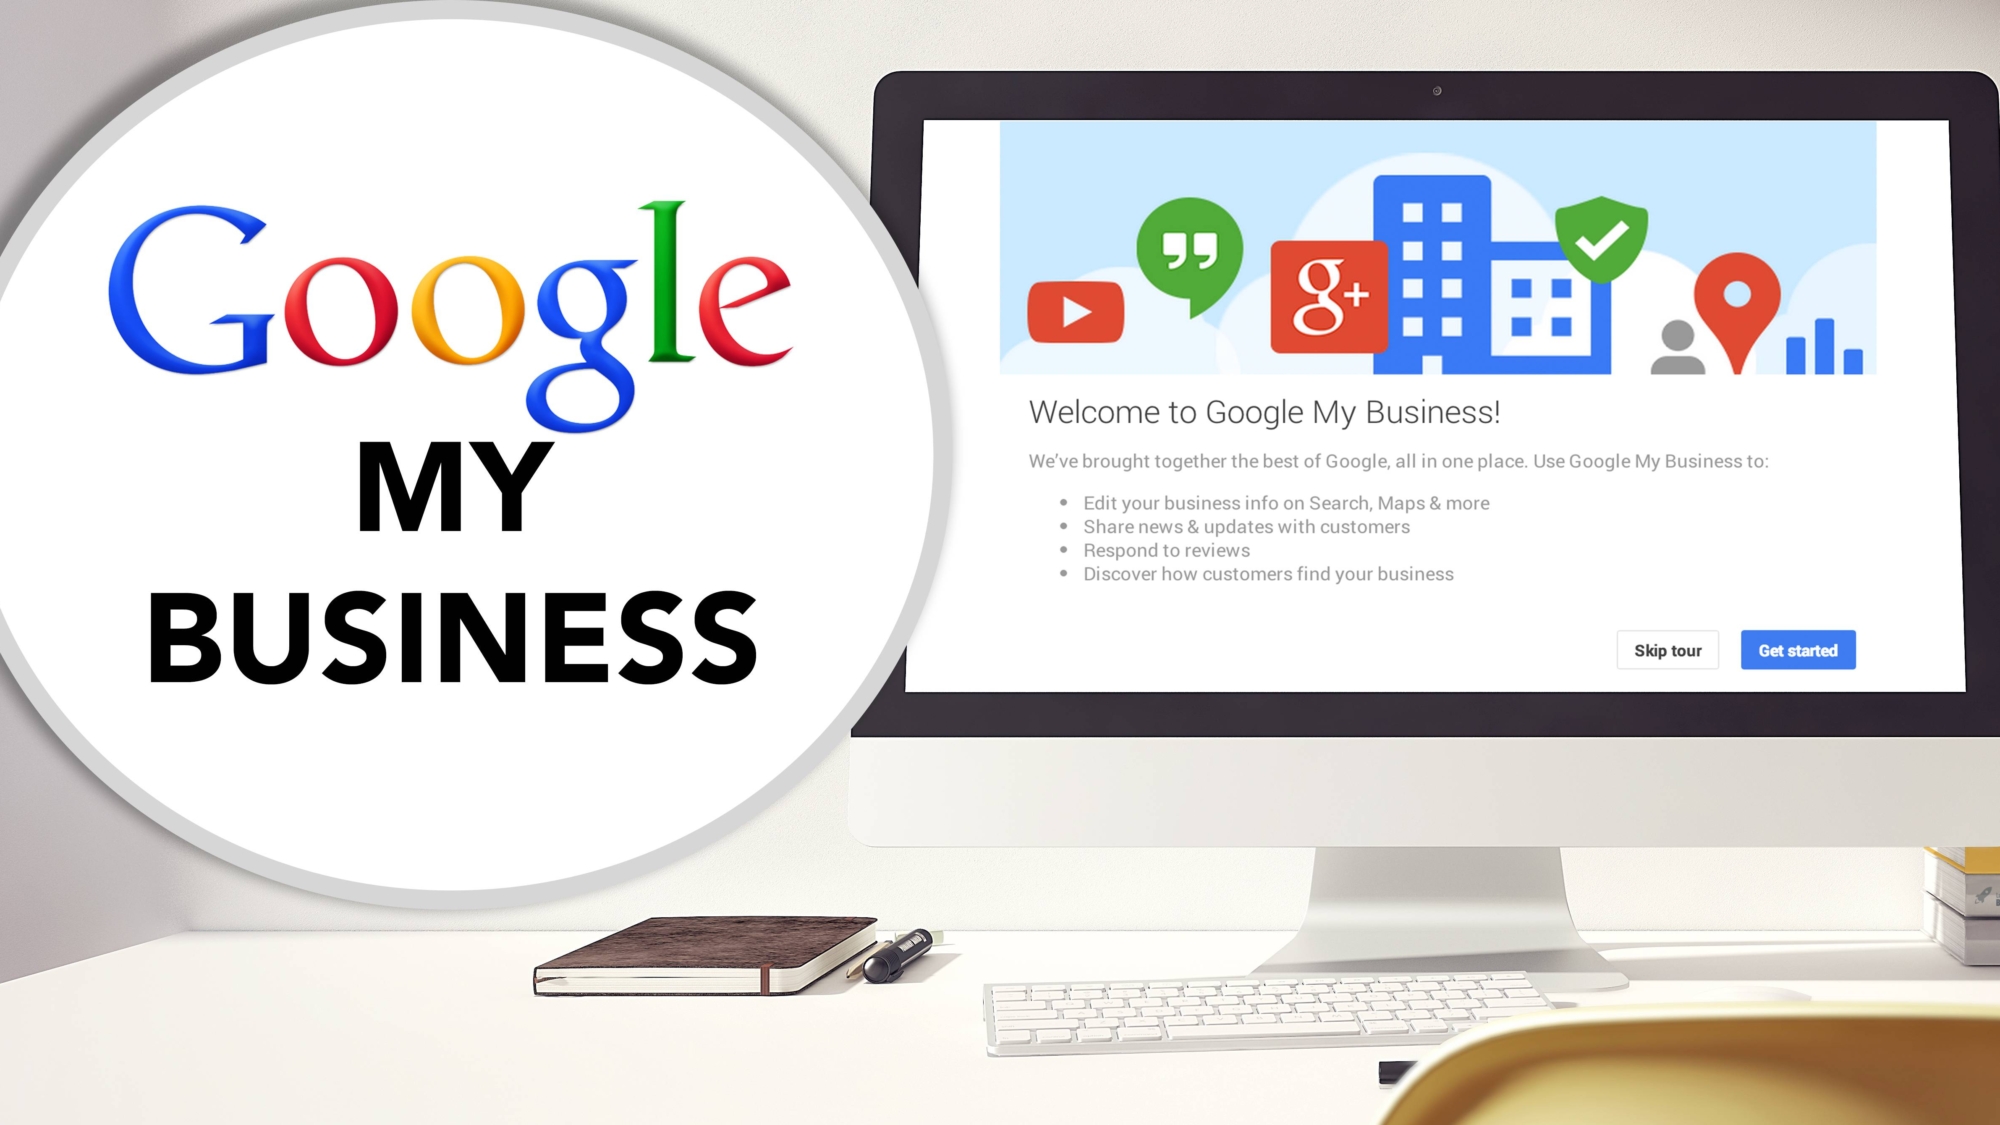 Google my Business